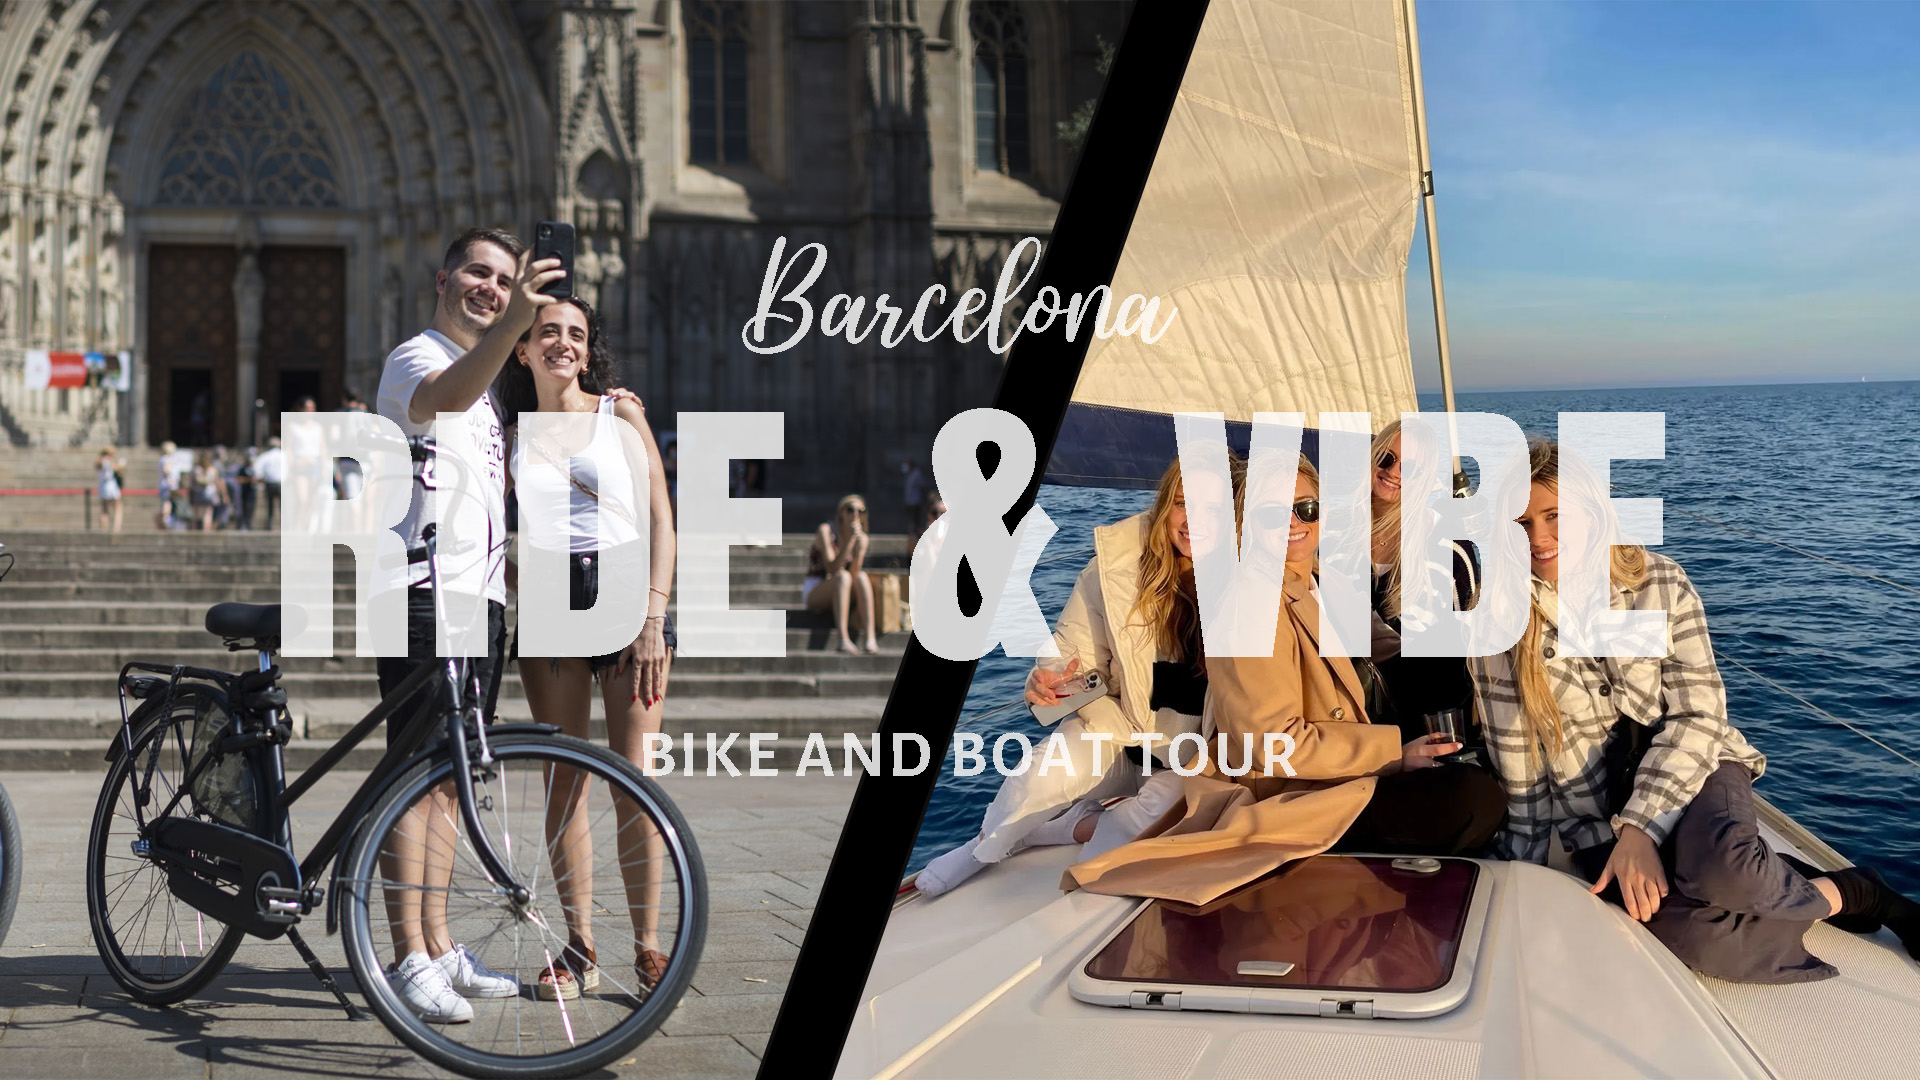 Bike- and boattour Barcelona